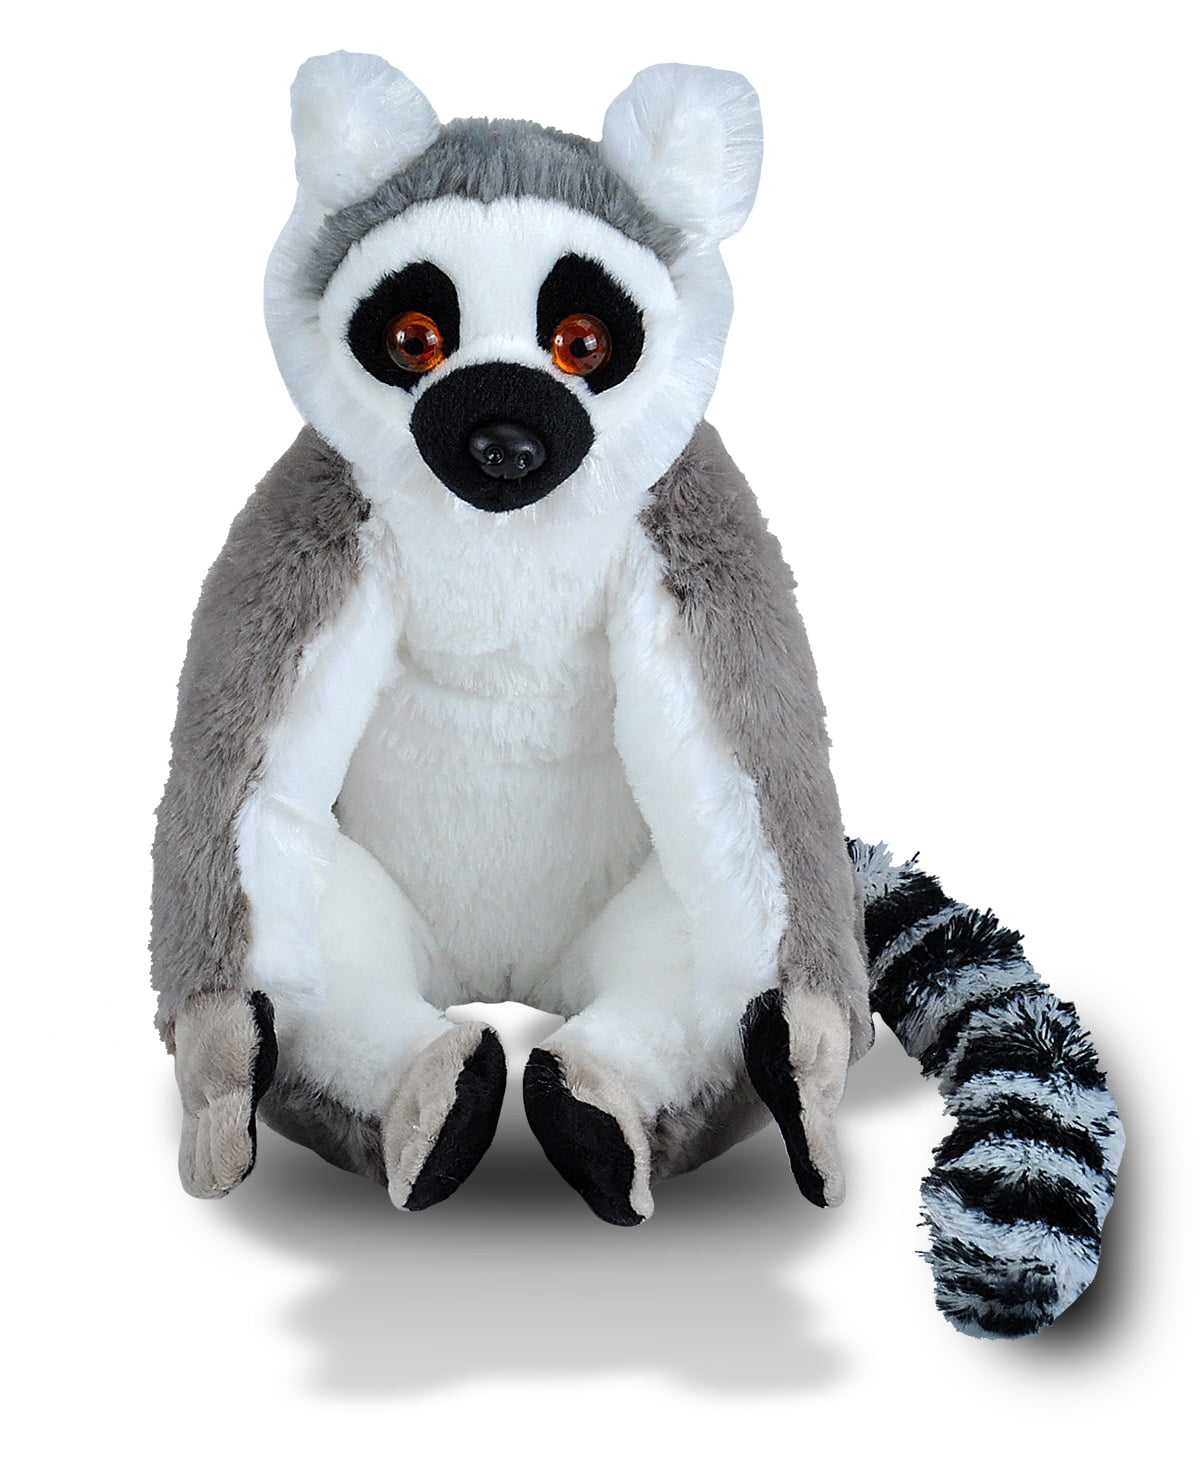 Cuddlekins Ring Tailed Lemur Plush Stuffed Animal by Wild Republic, Kid  Gifts, Zoo Animals, 12 Inches 